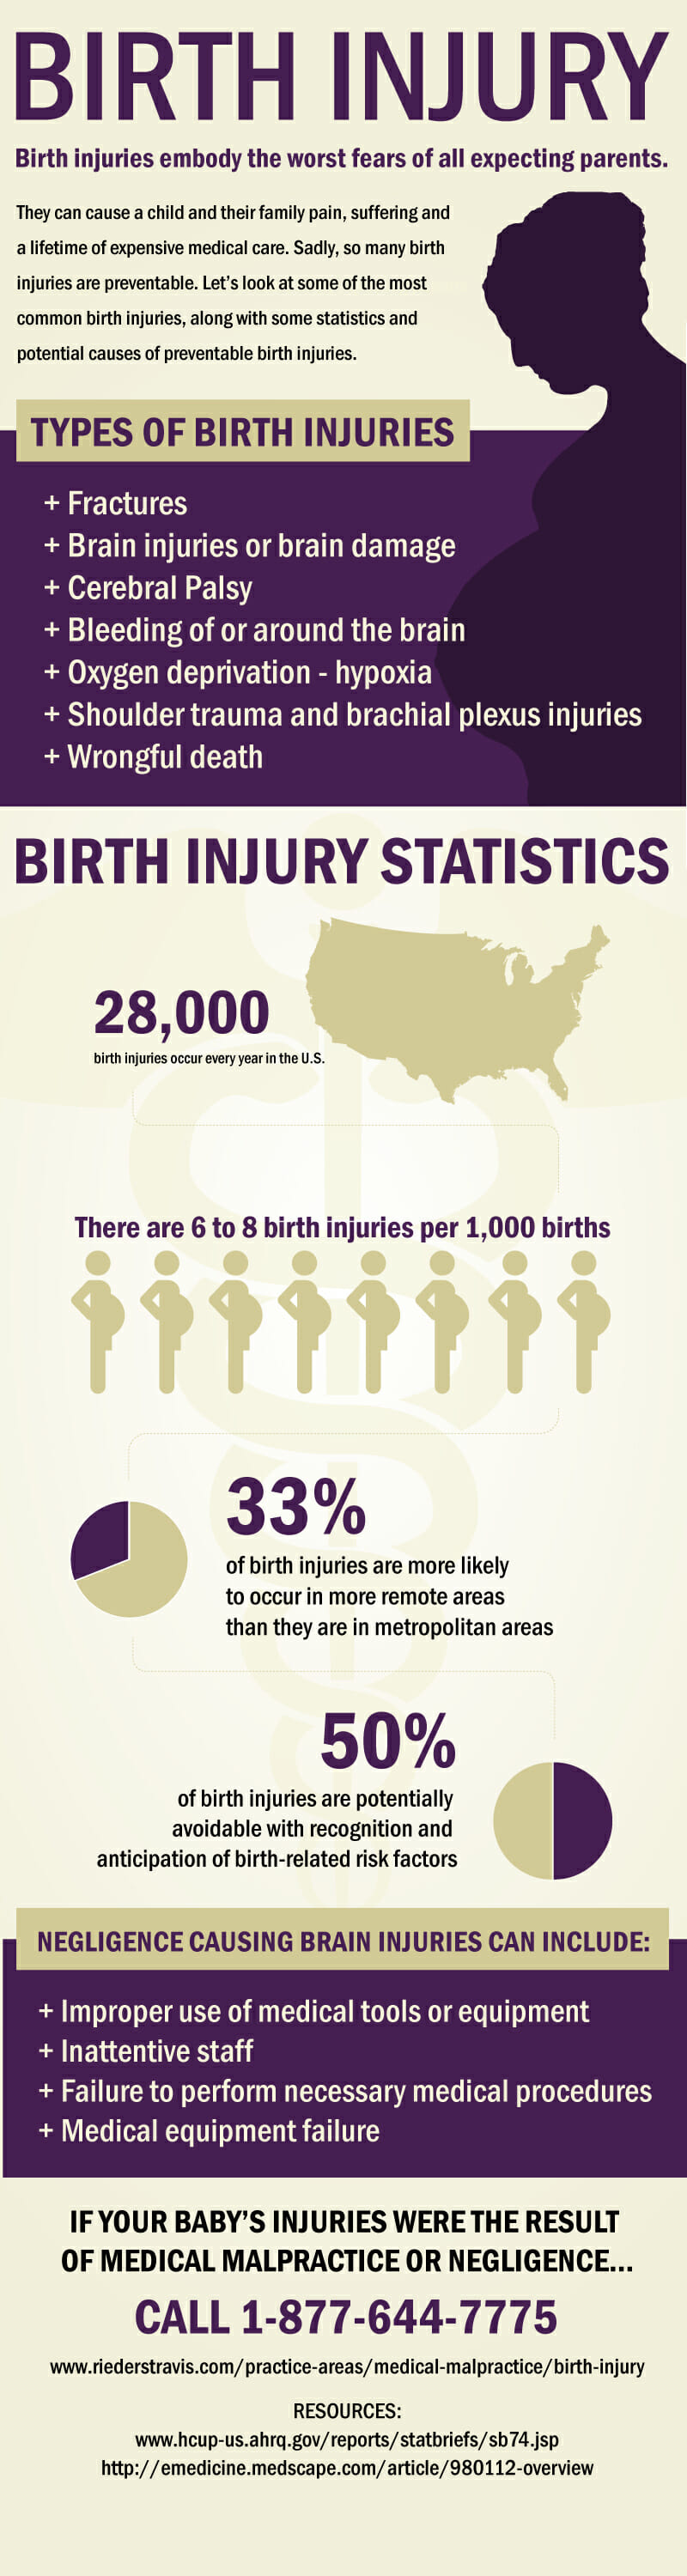 Infographic: Birth Injury Types and Statistics